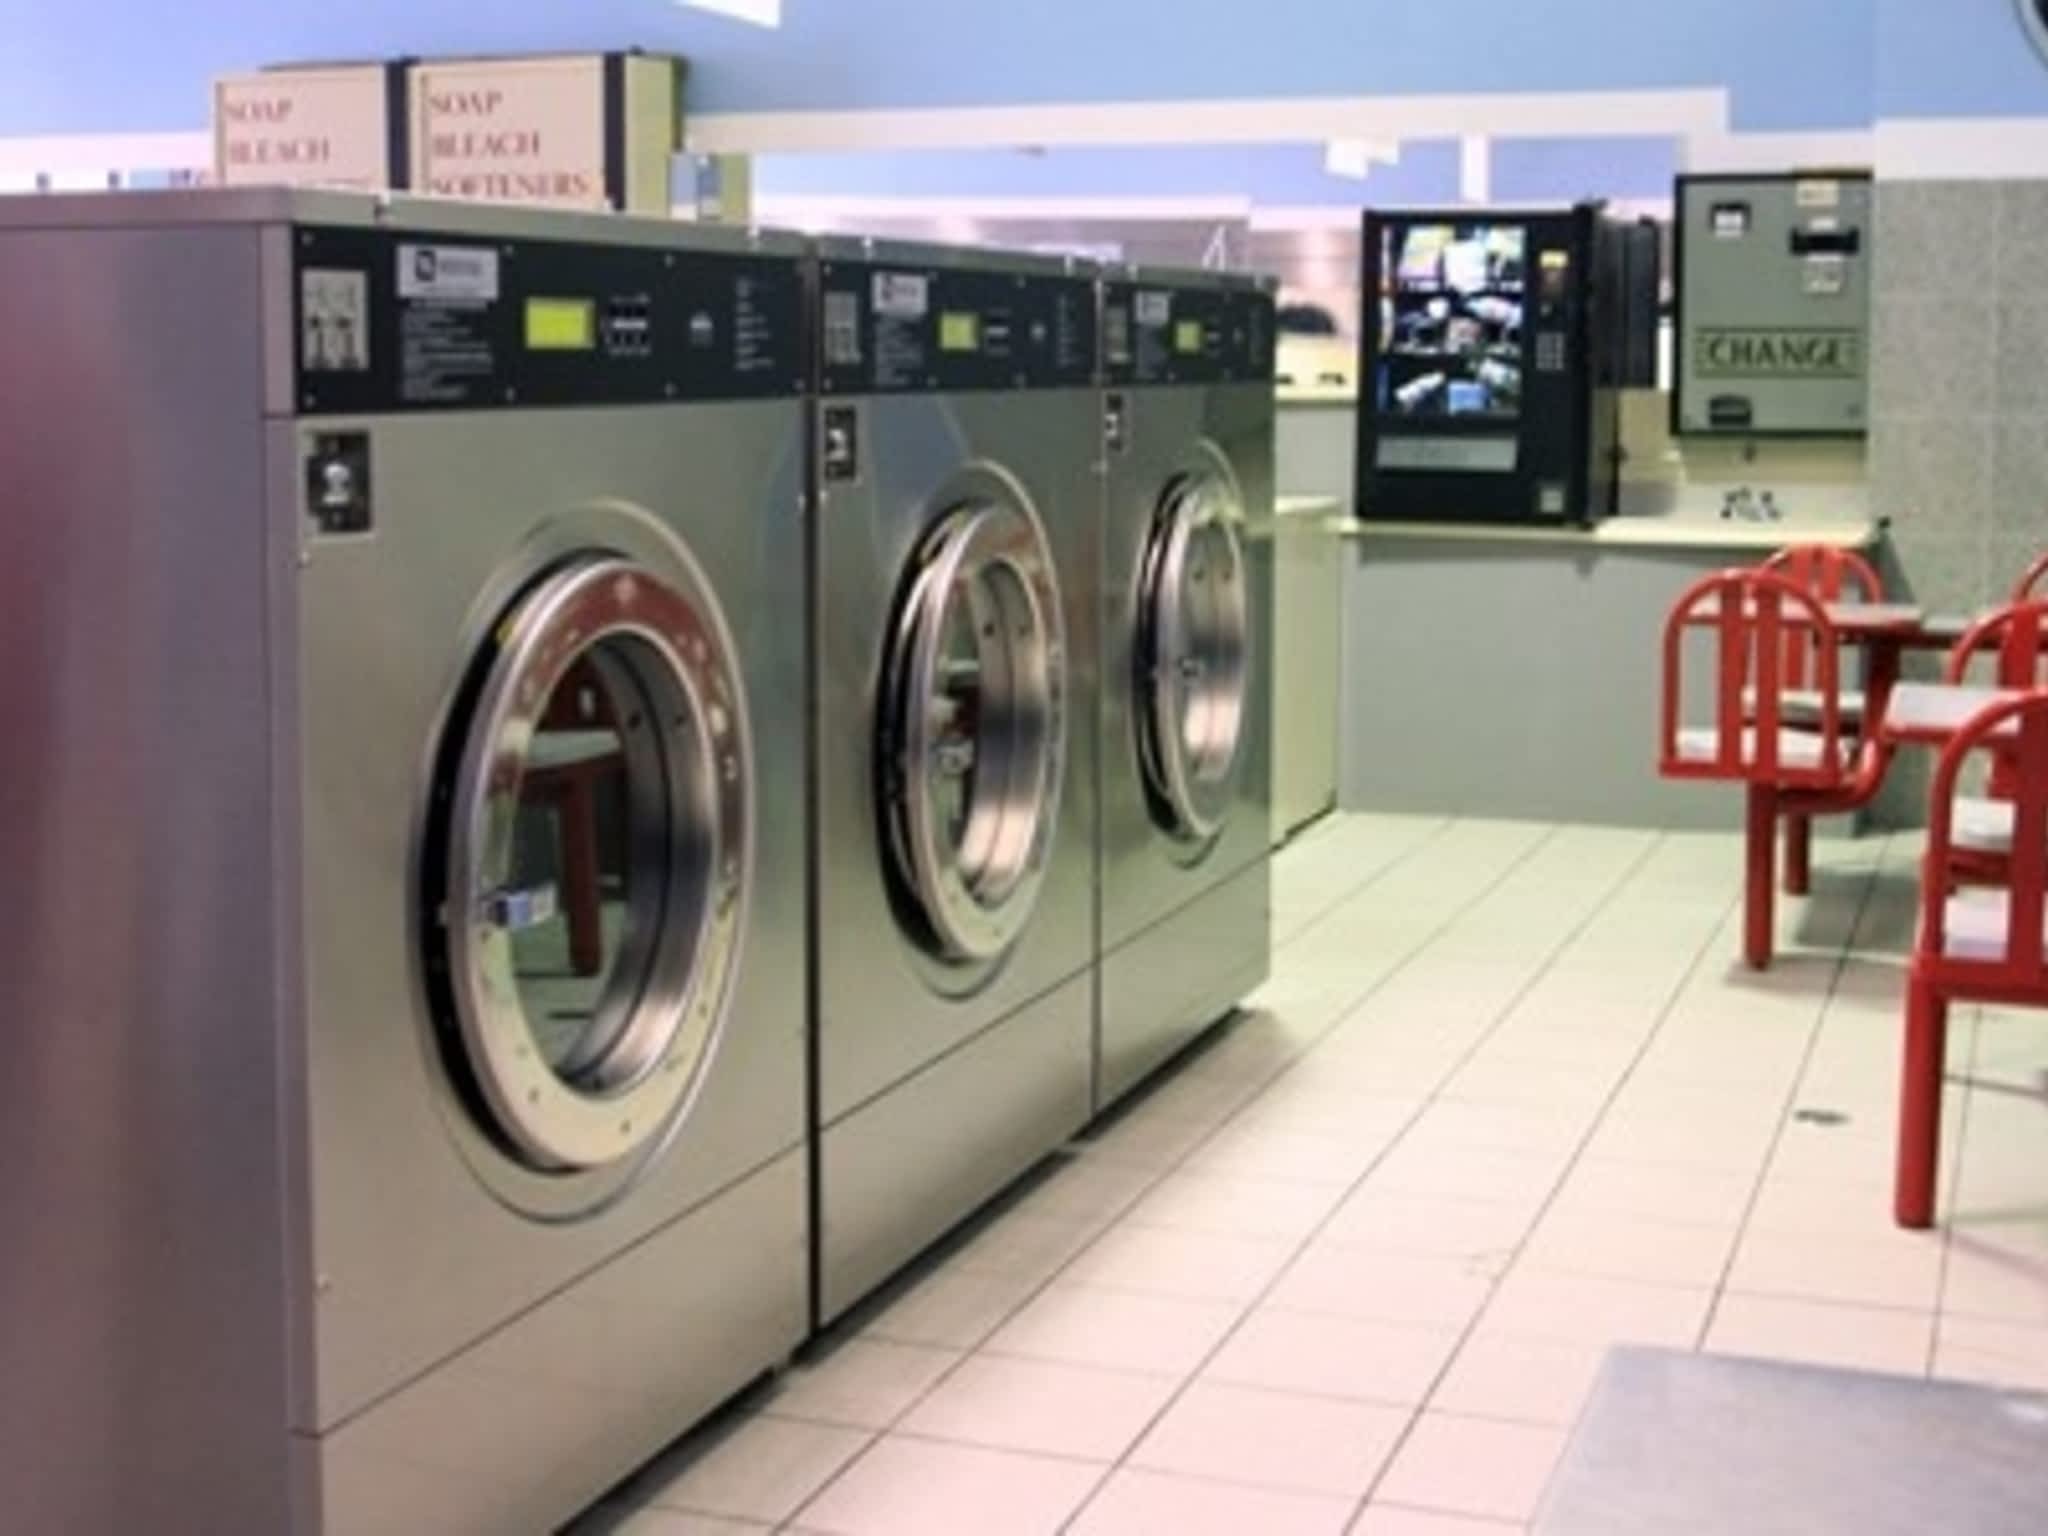 24 hour laundromat san francisco - lokiwheel